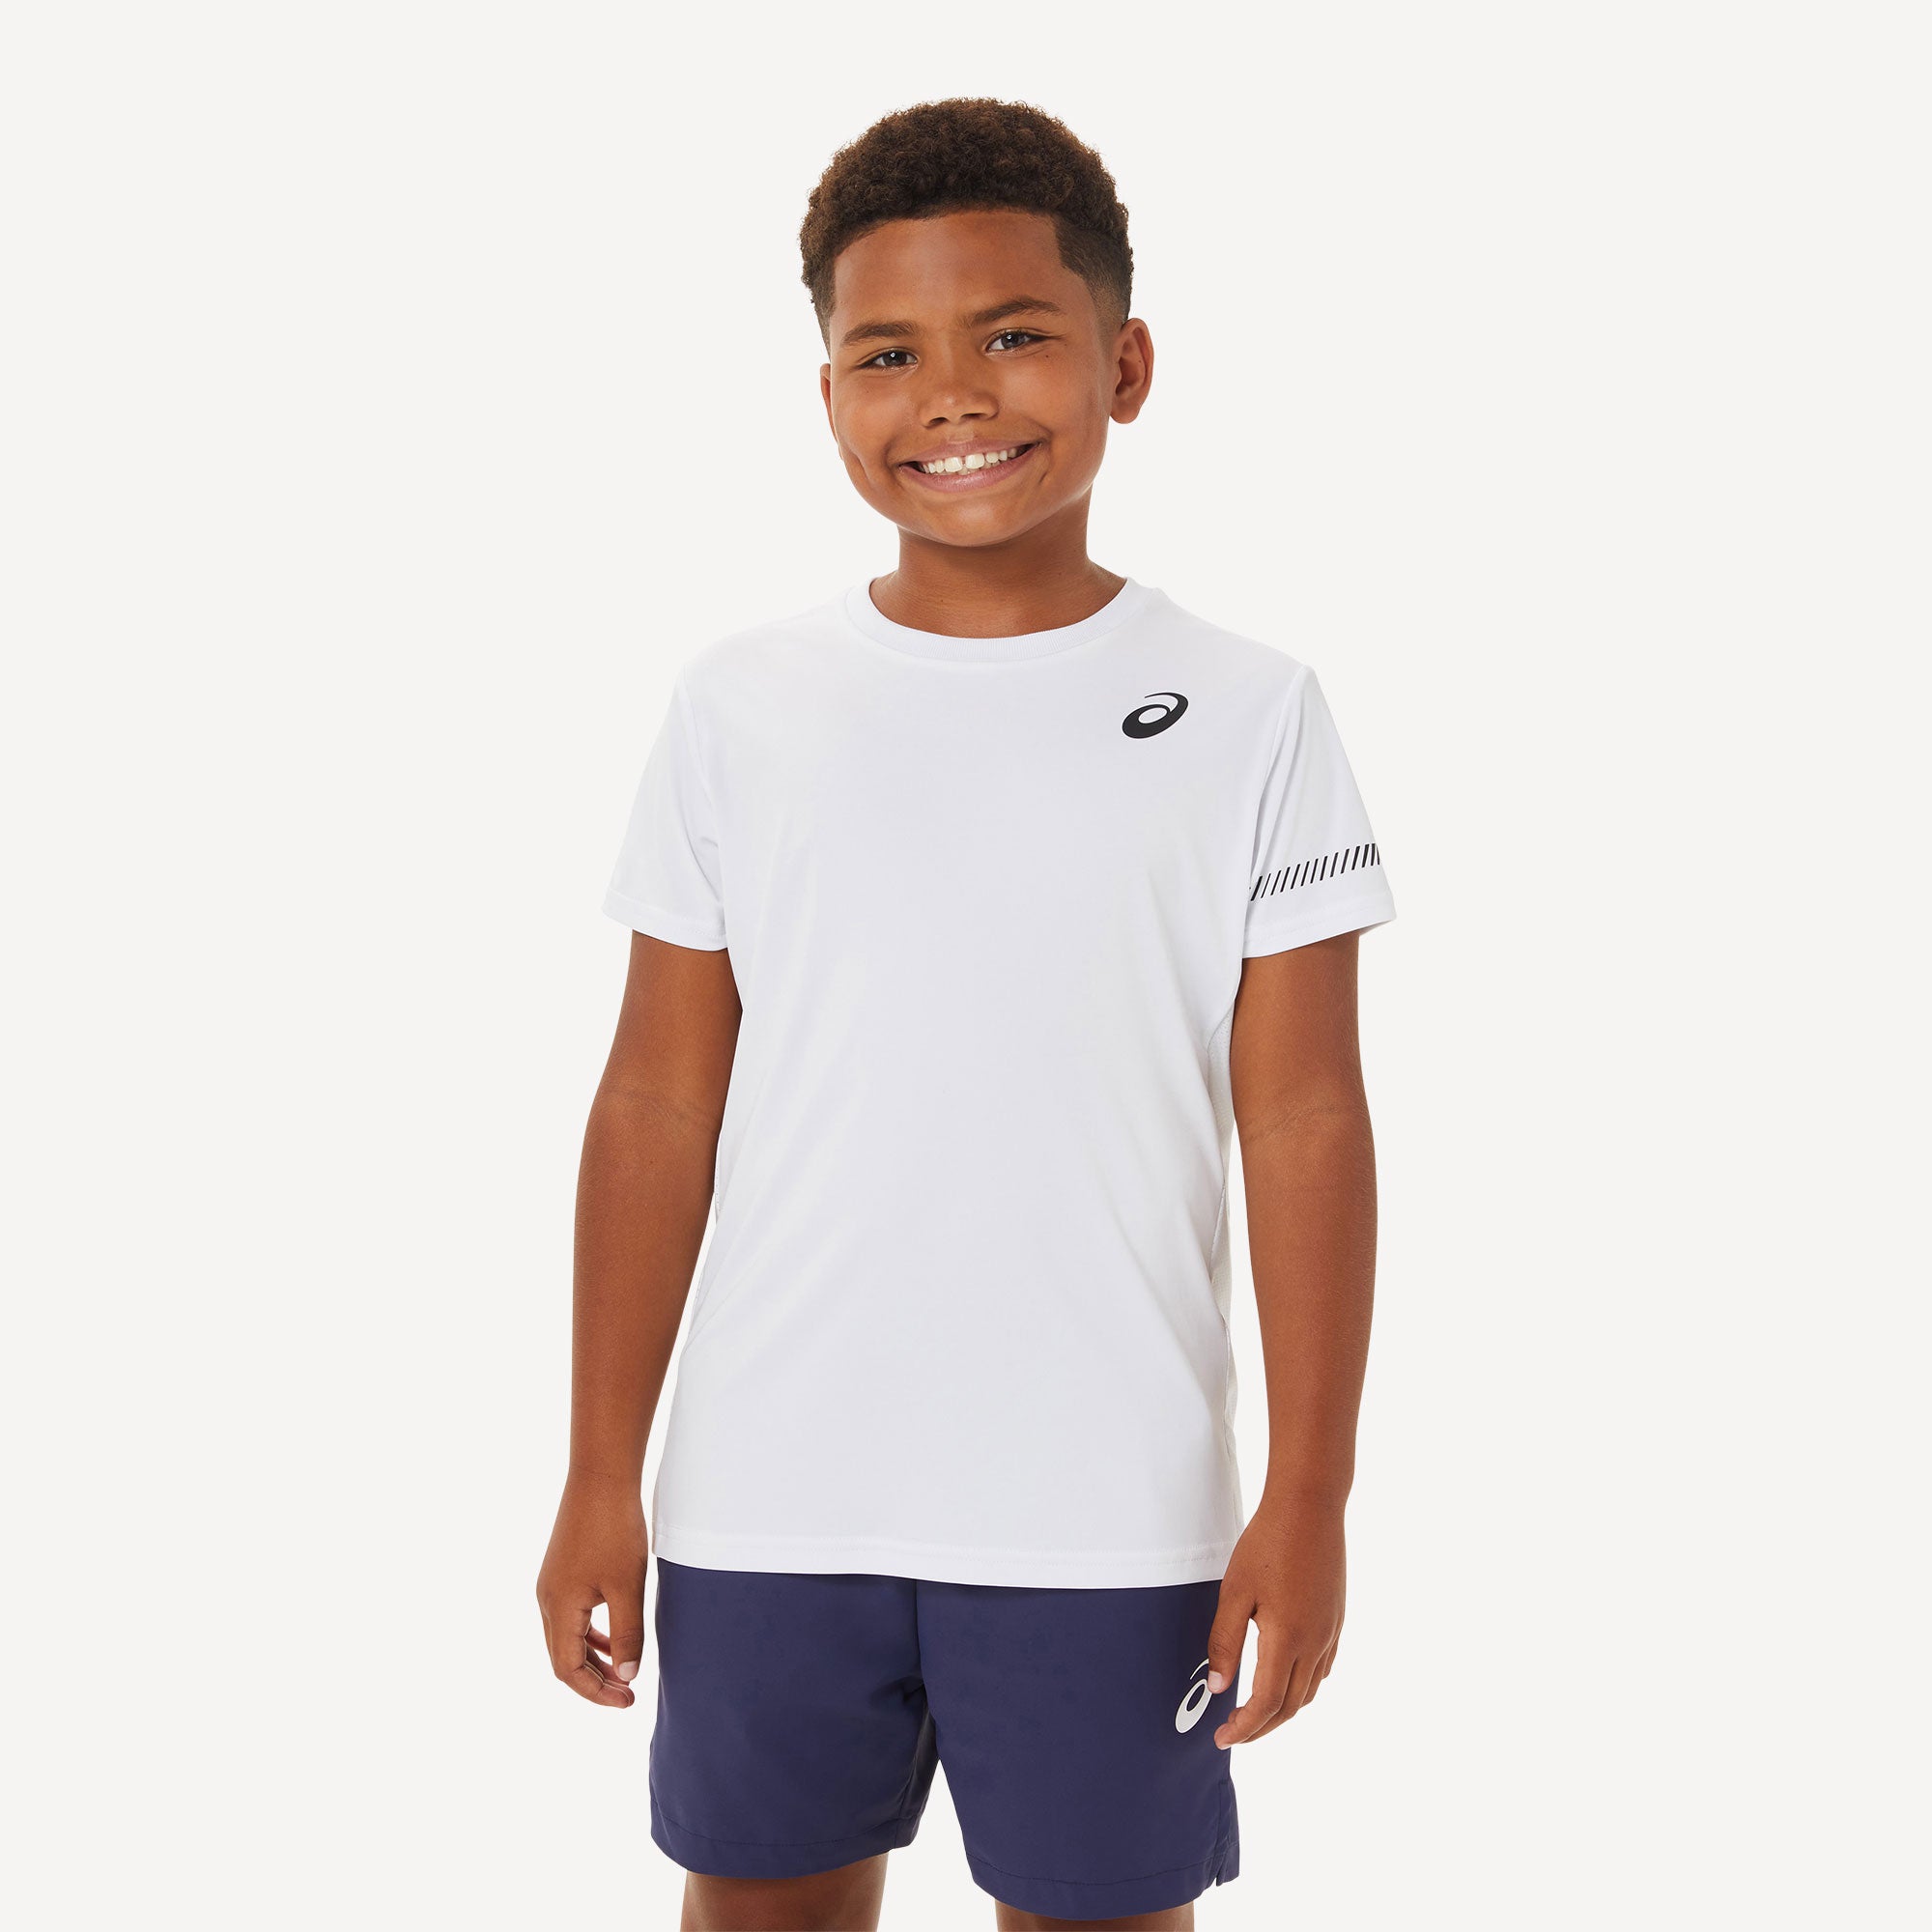 ASICS Boys' Tennis Shirt White (1)